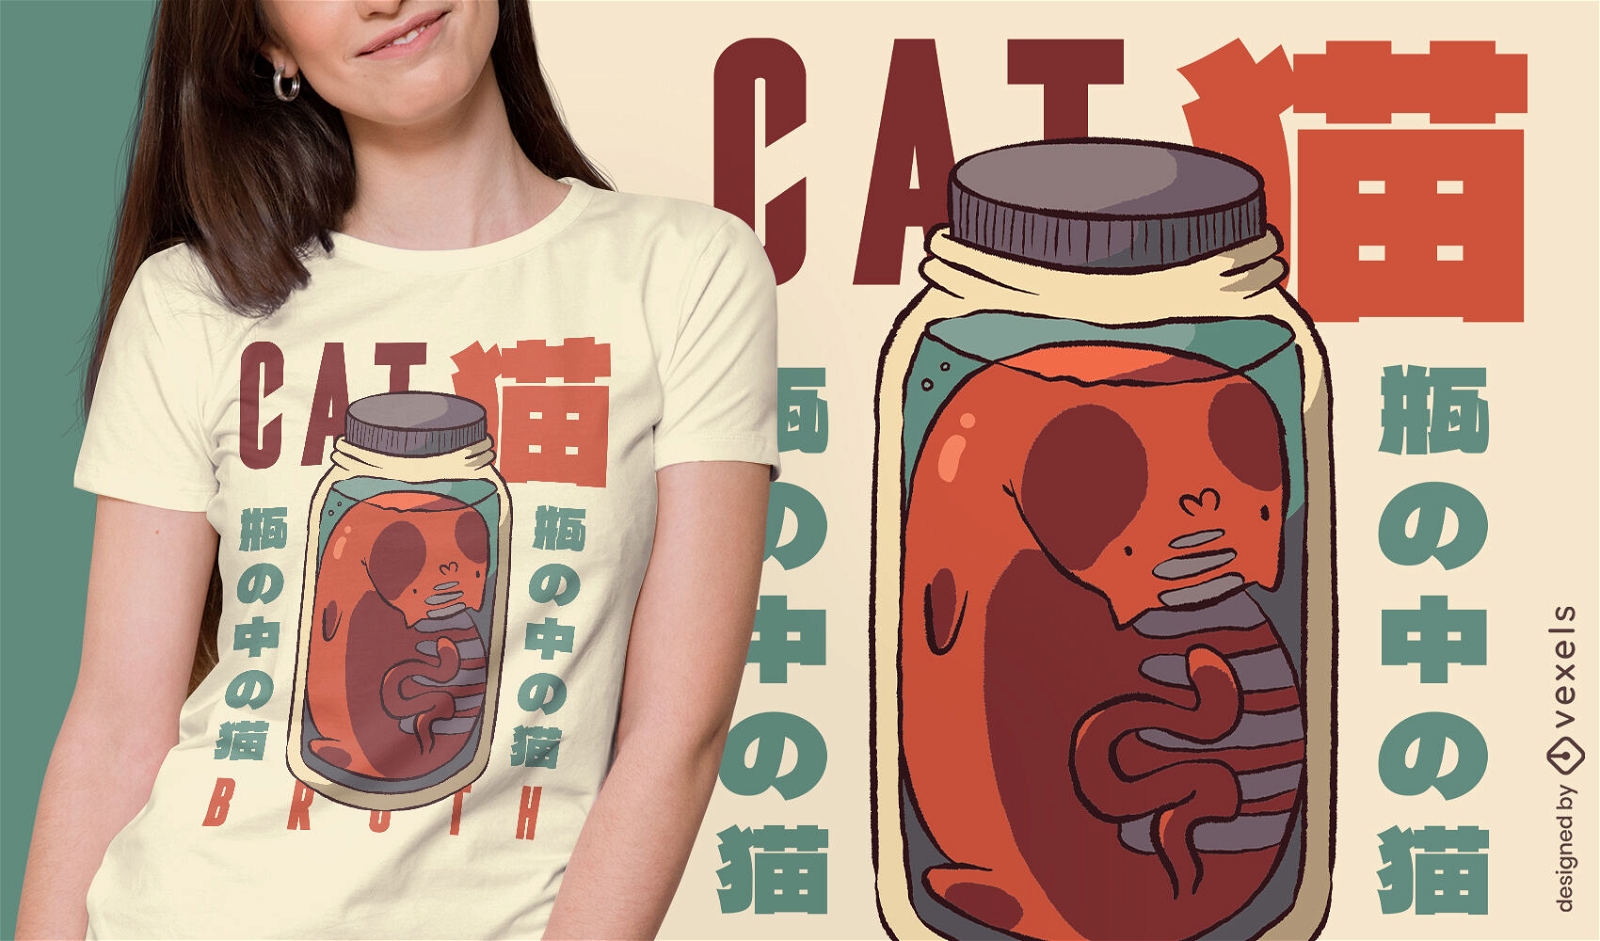 Animal gato em design de camiseta de mason jar